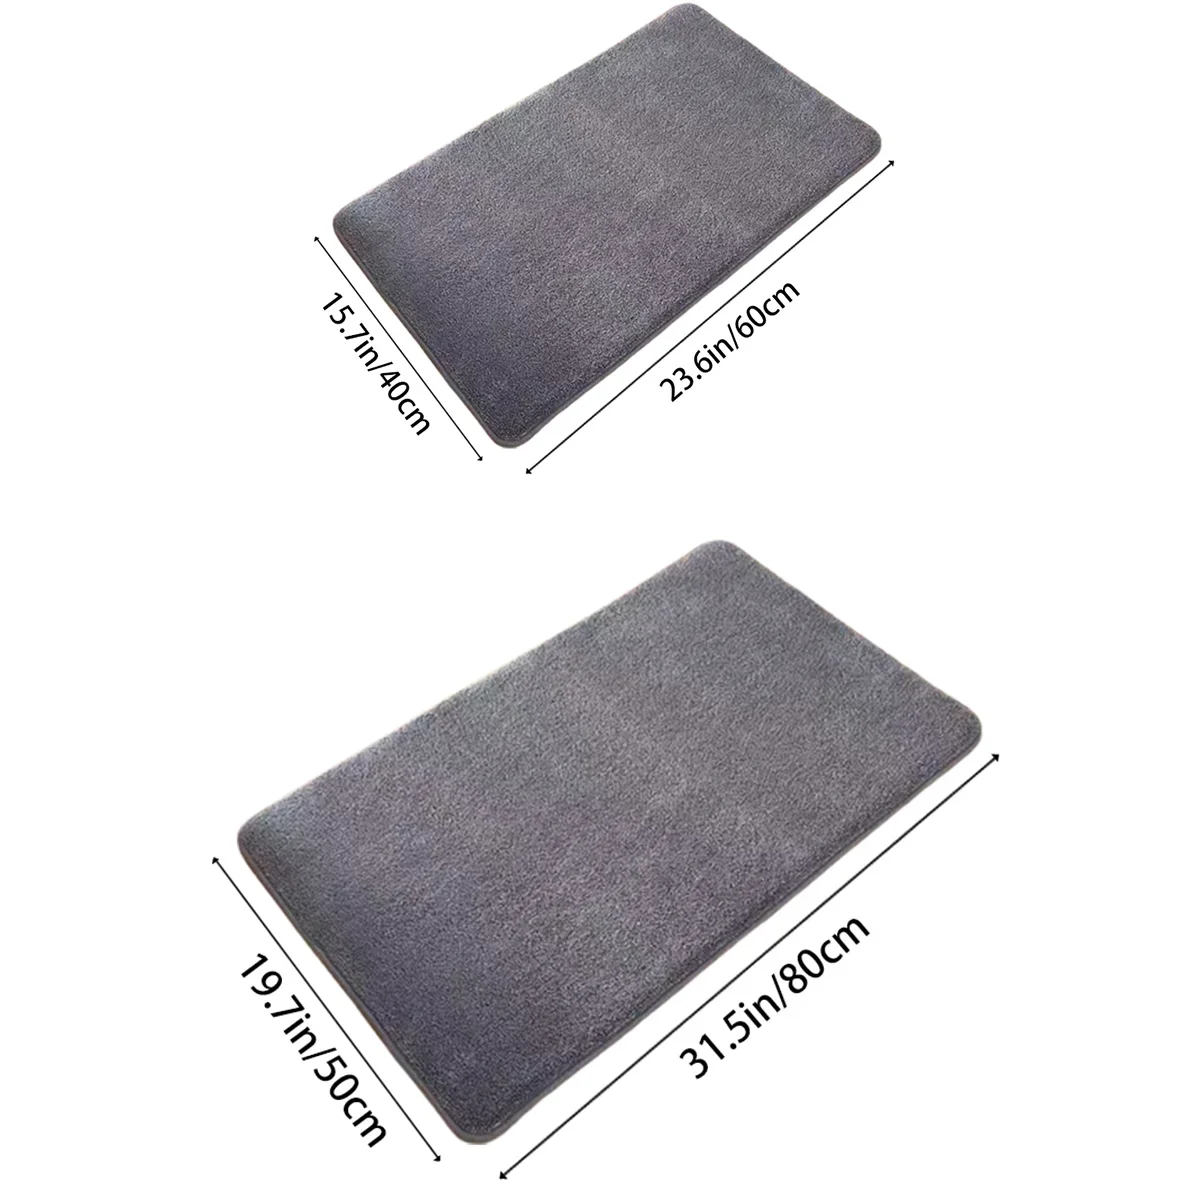 Reusable super absorbent floor mat, super absorbent bath mat, super anti slip coral velvet bathroom floor mat, door mat